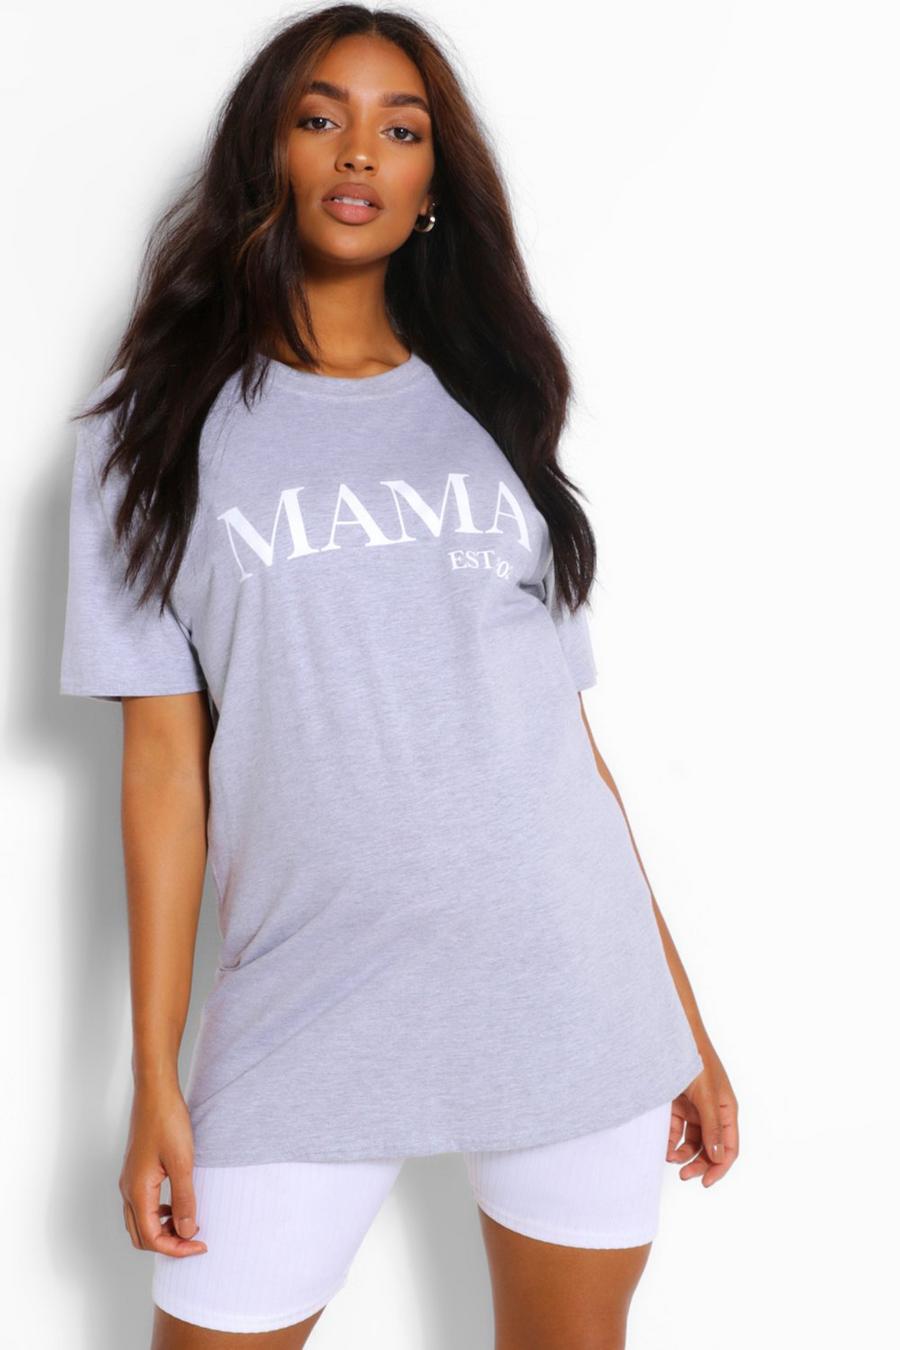 Camiseta con eslogan “Mama Est 2012” Ropa premamá, Marga gris image number 1